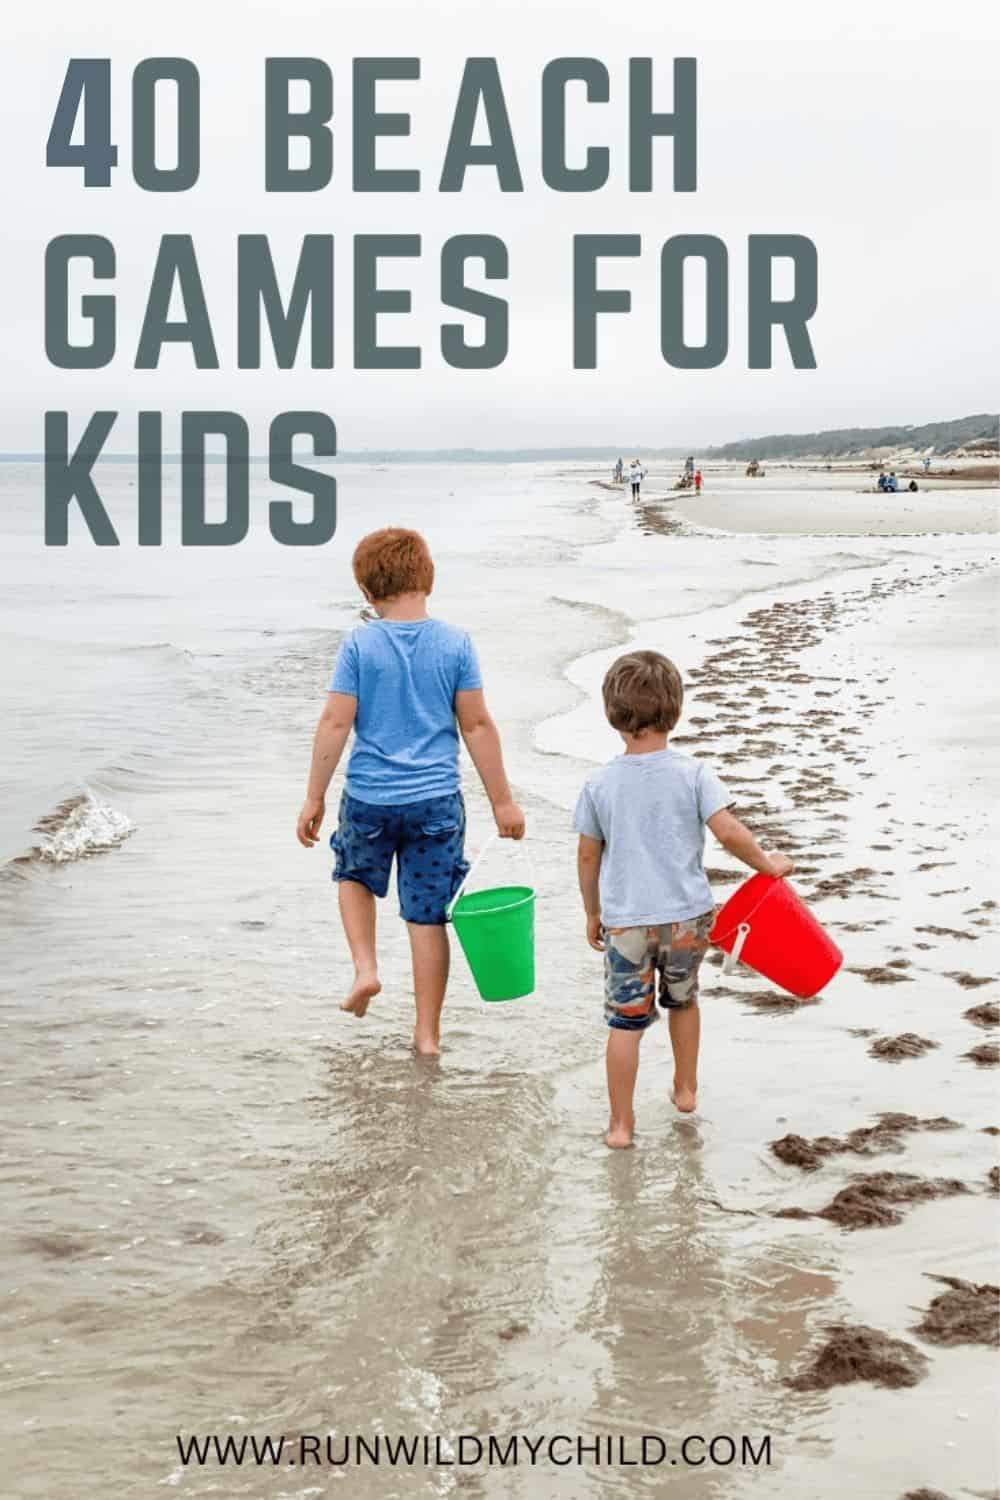 40 Beach Games for Kids • RUN WILD MY CHILD